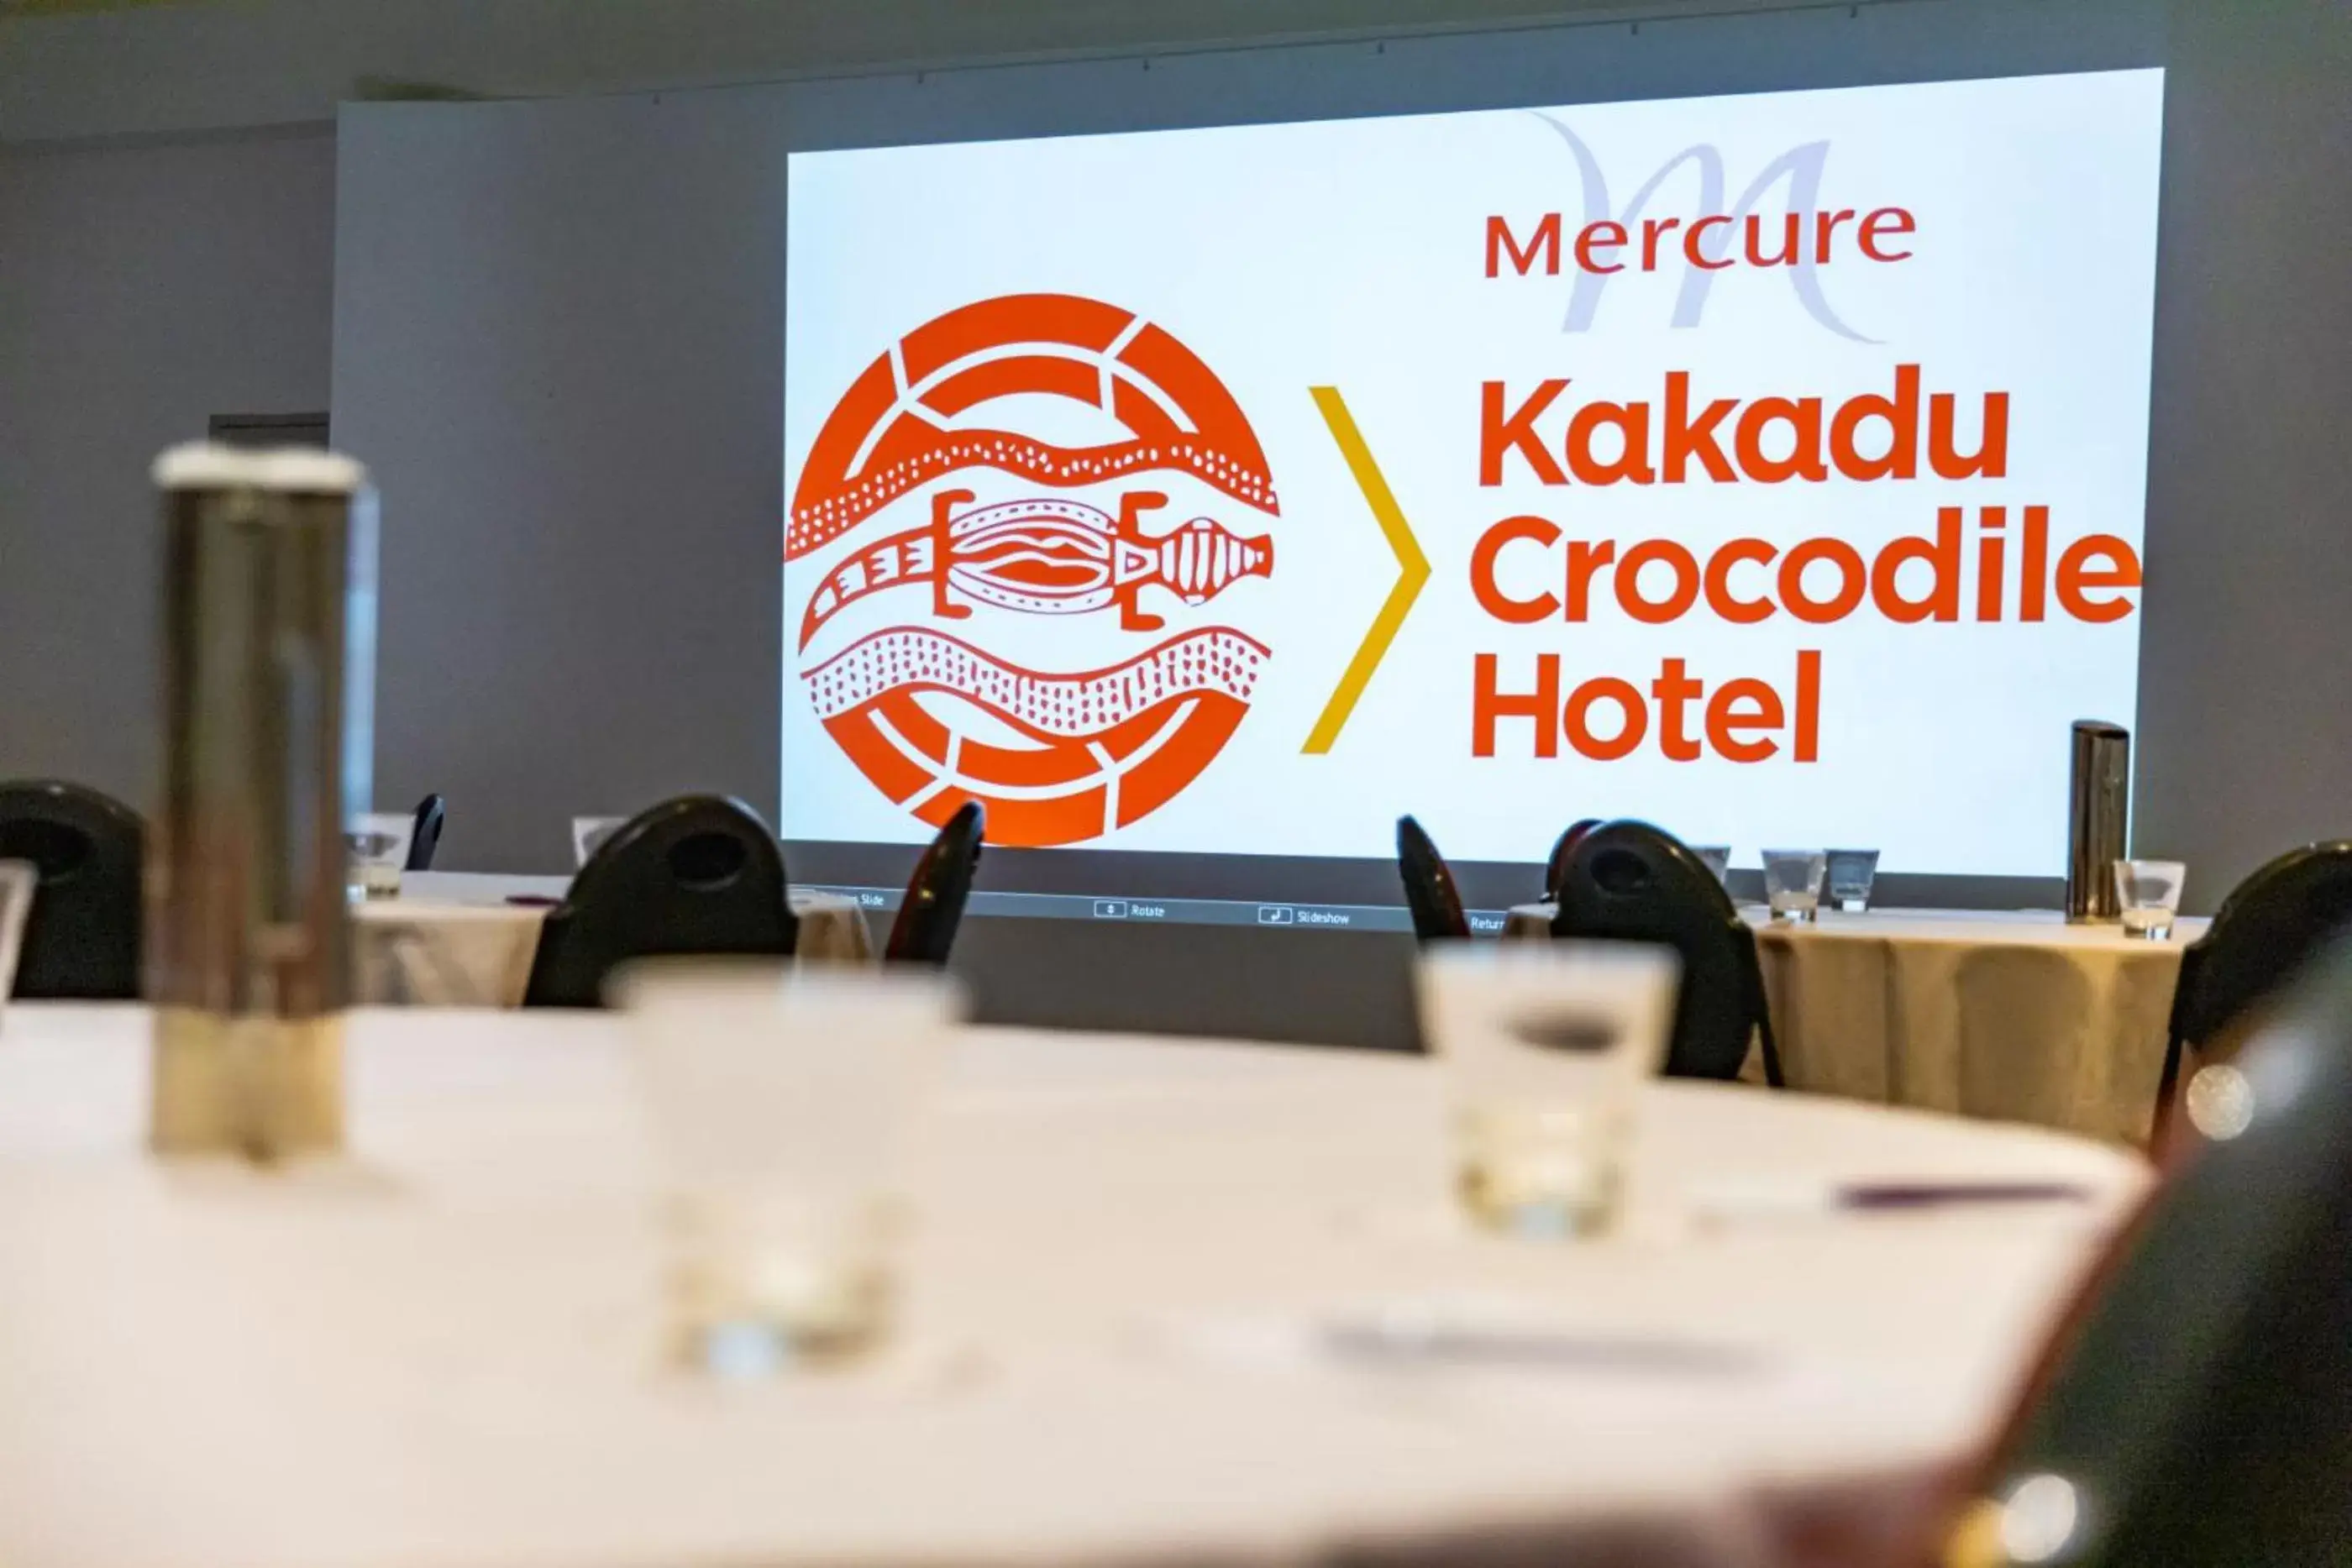 Meeting/conference room in Mercure Kakadu Crocodile